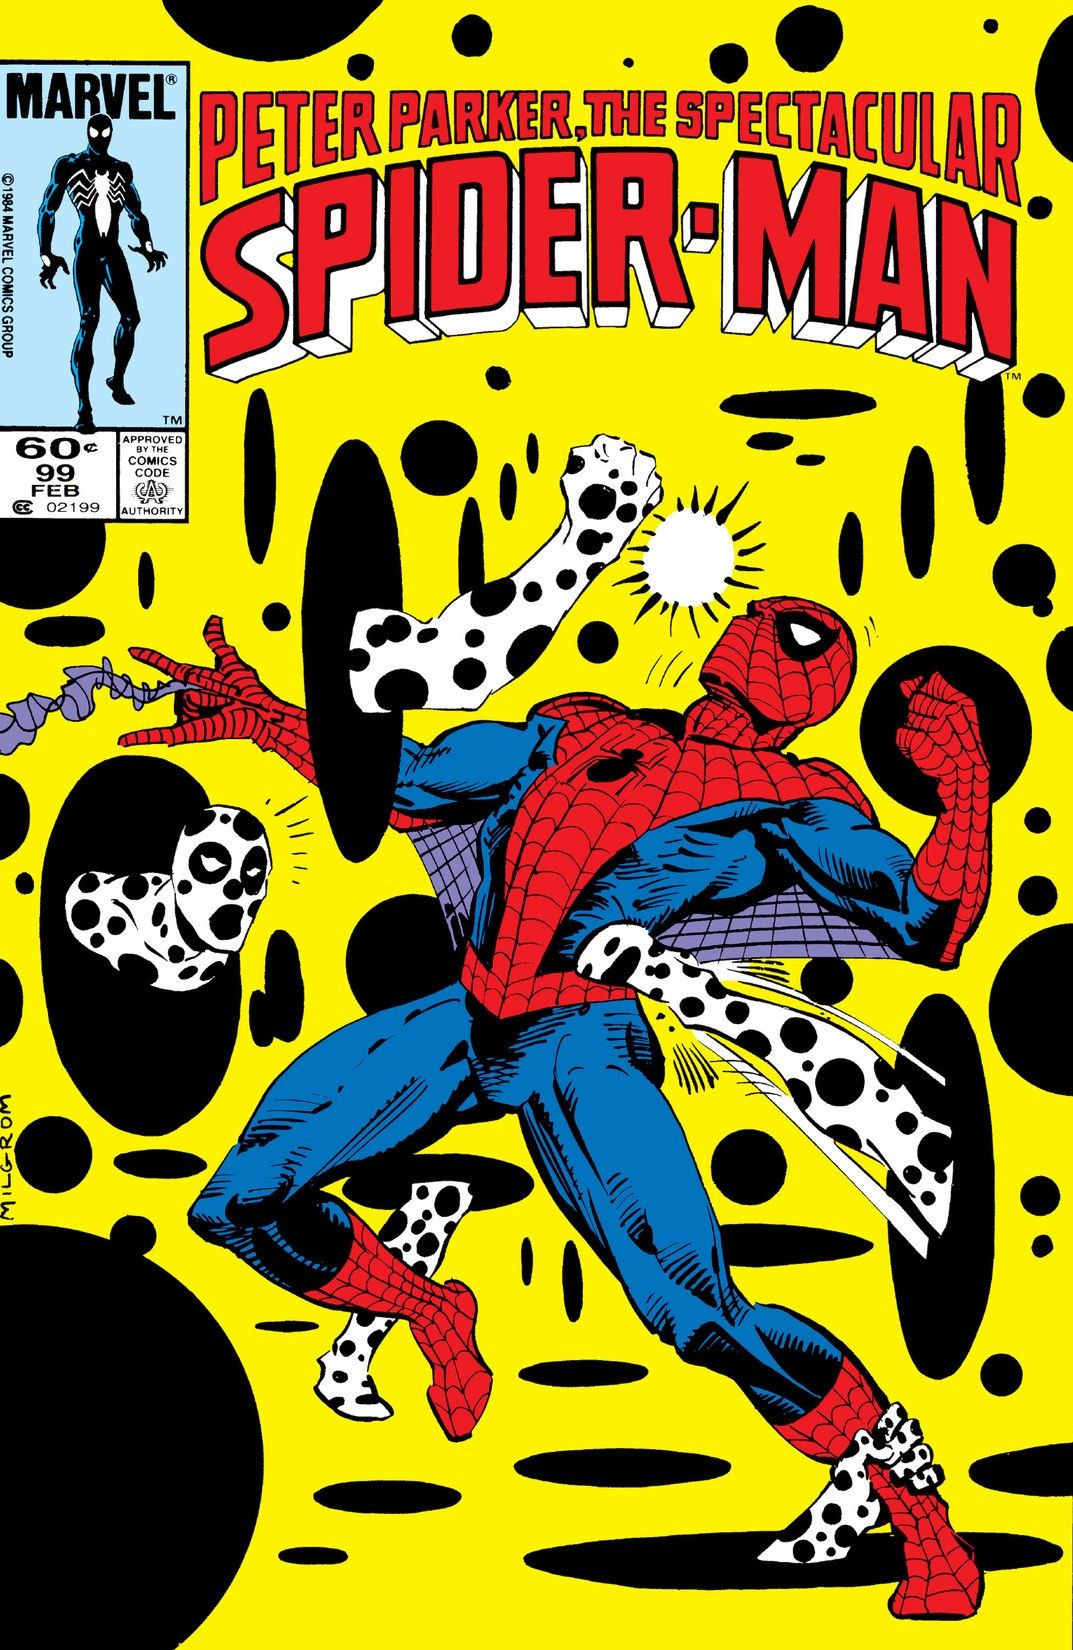 'Amazing Spider-Man 2': Sinister Six villain wish list! | EW.com